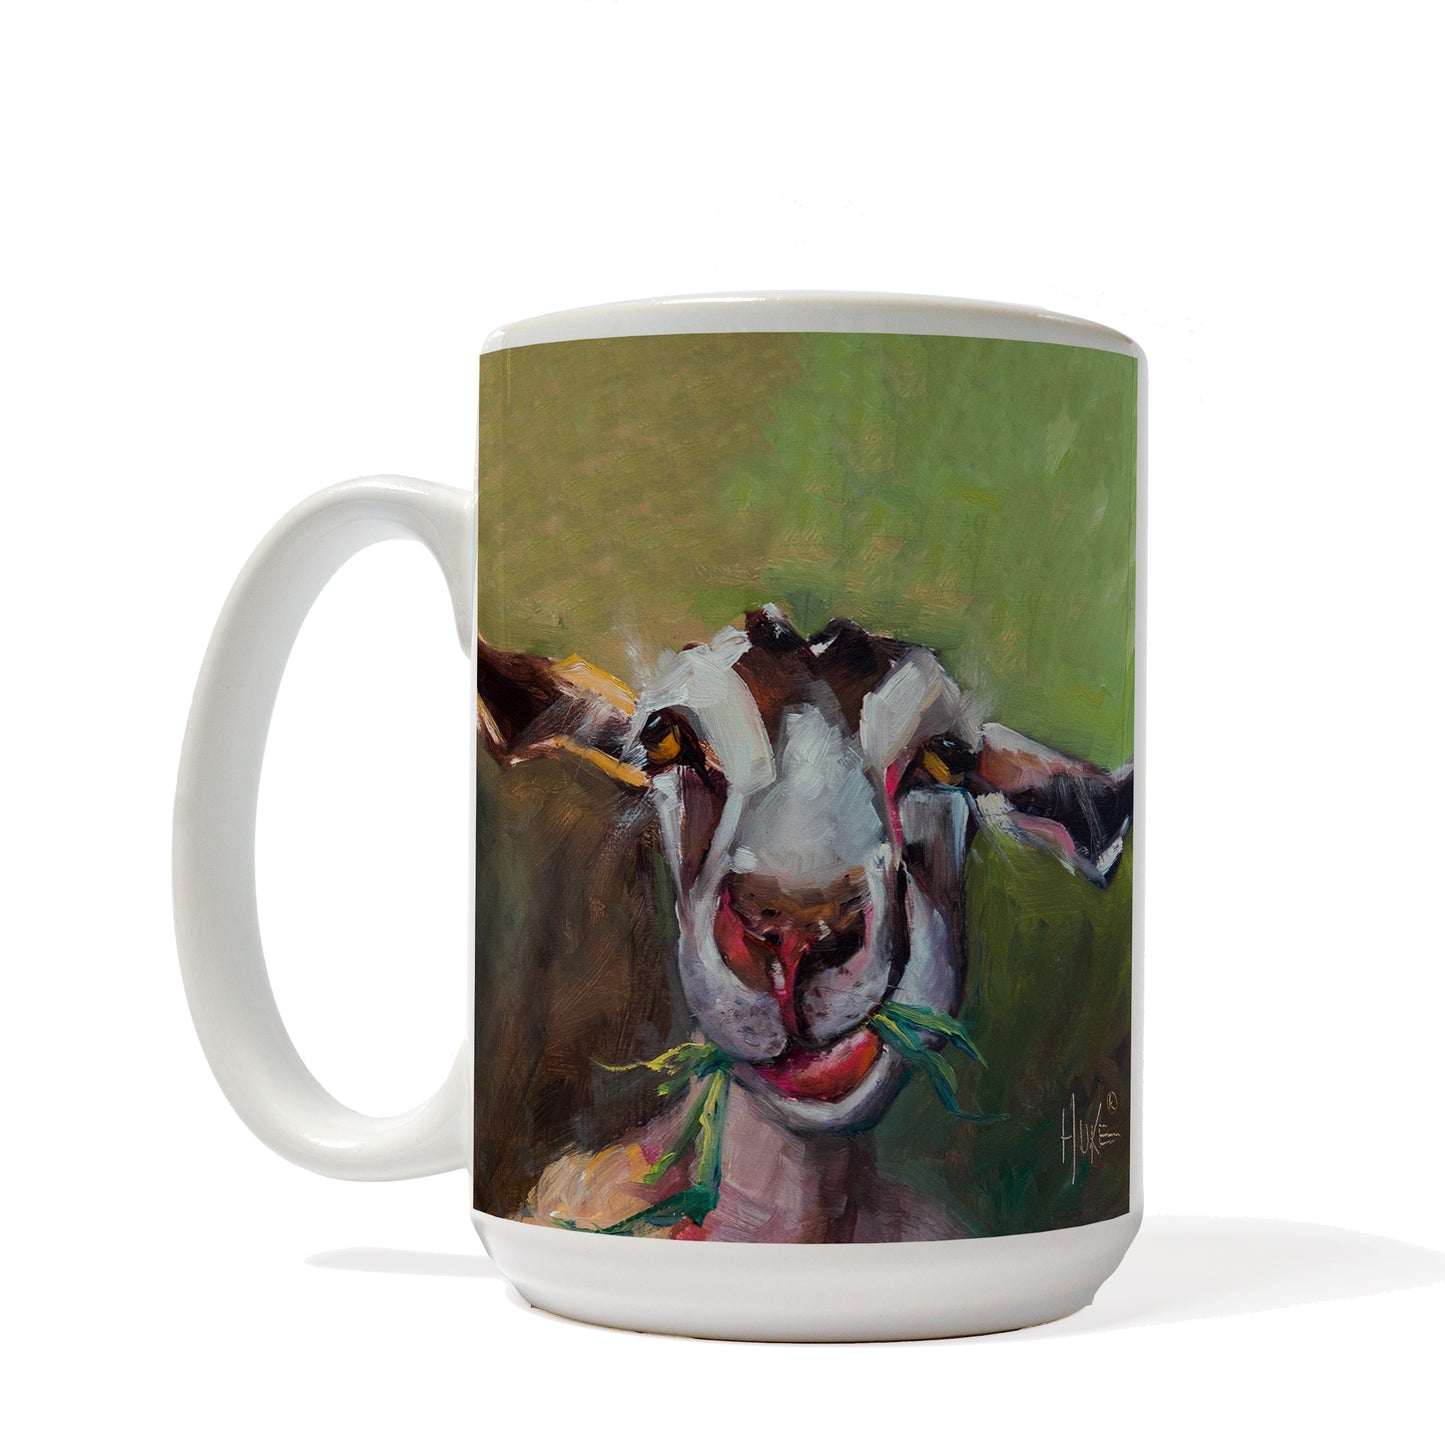 Rustic Goat Mug By K. Huke